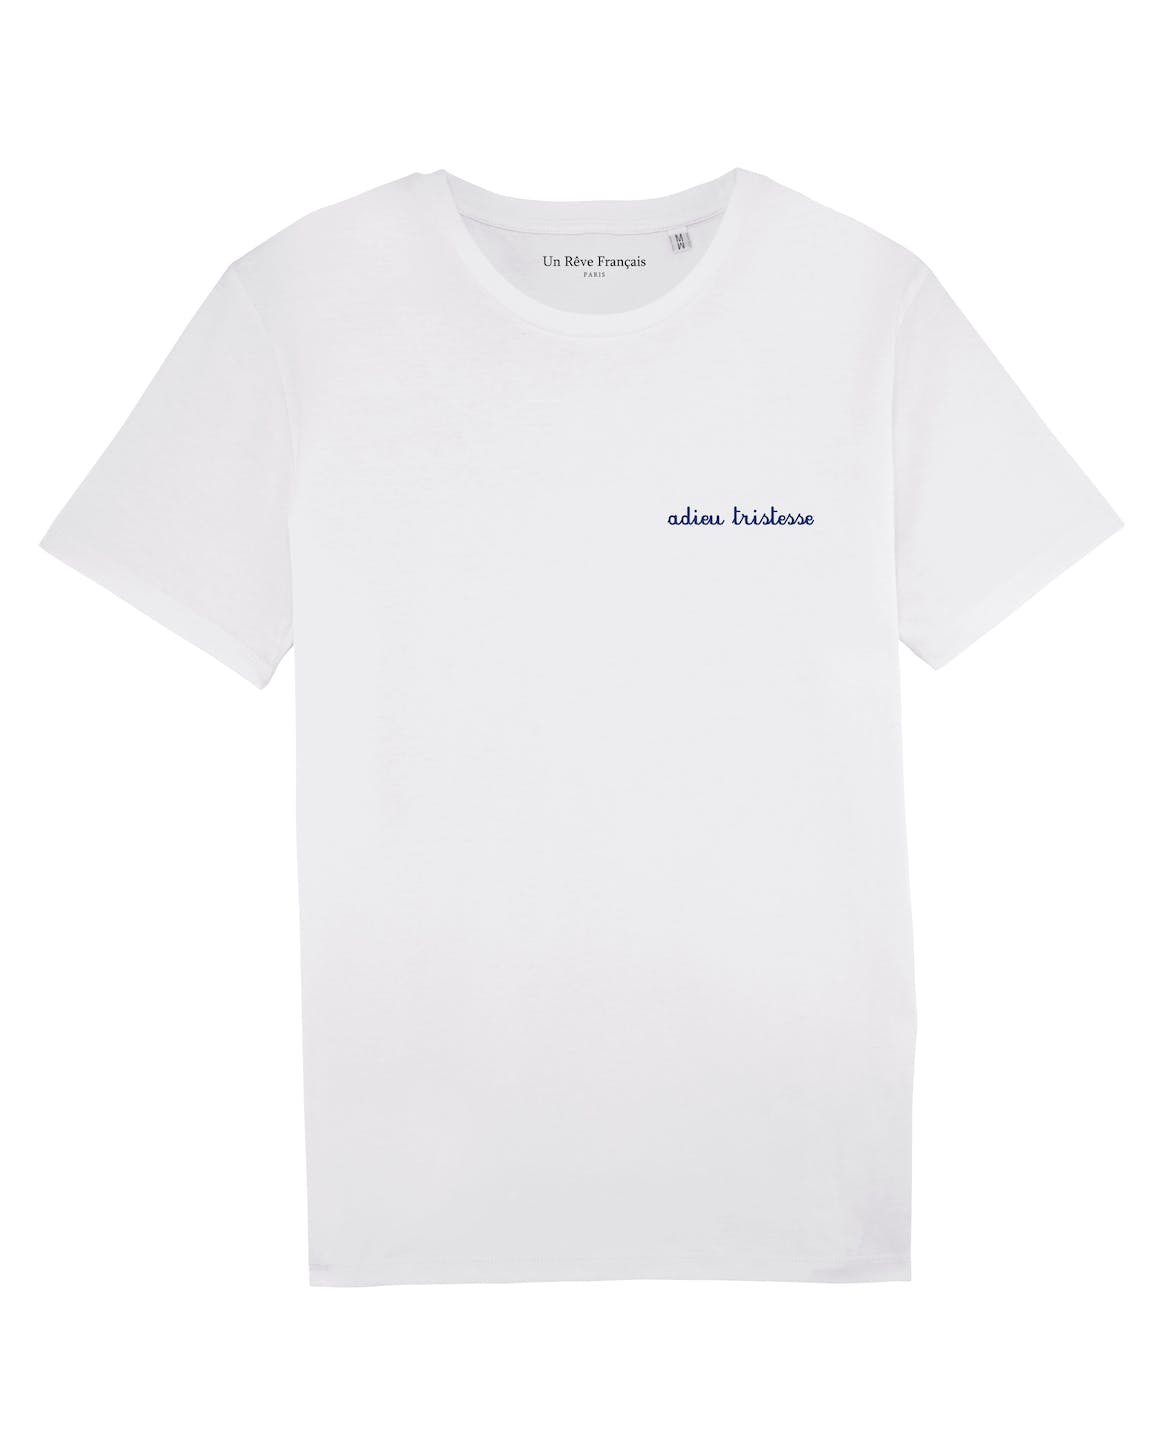 T-Shirt "adieu tristesse" Bio Baumwolle Paris Frankreich